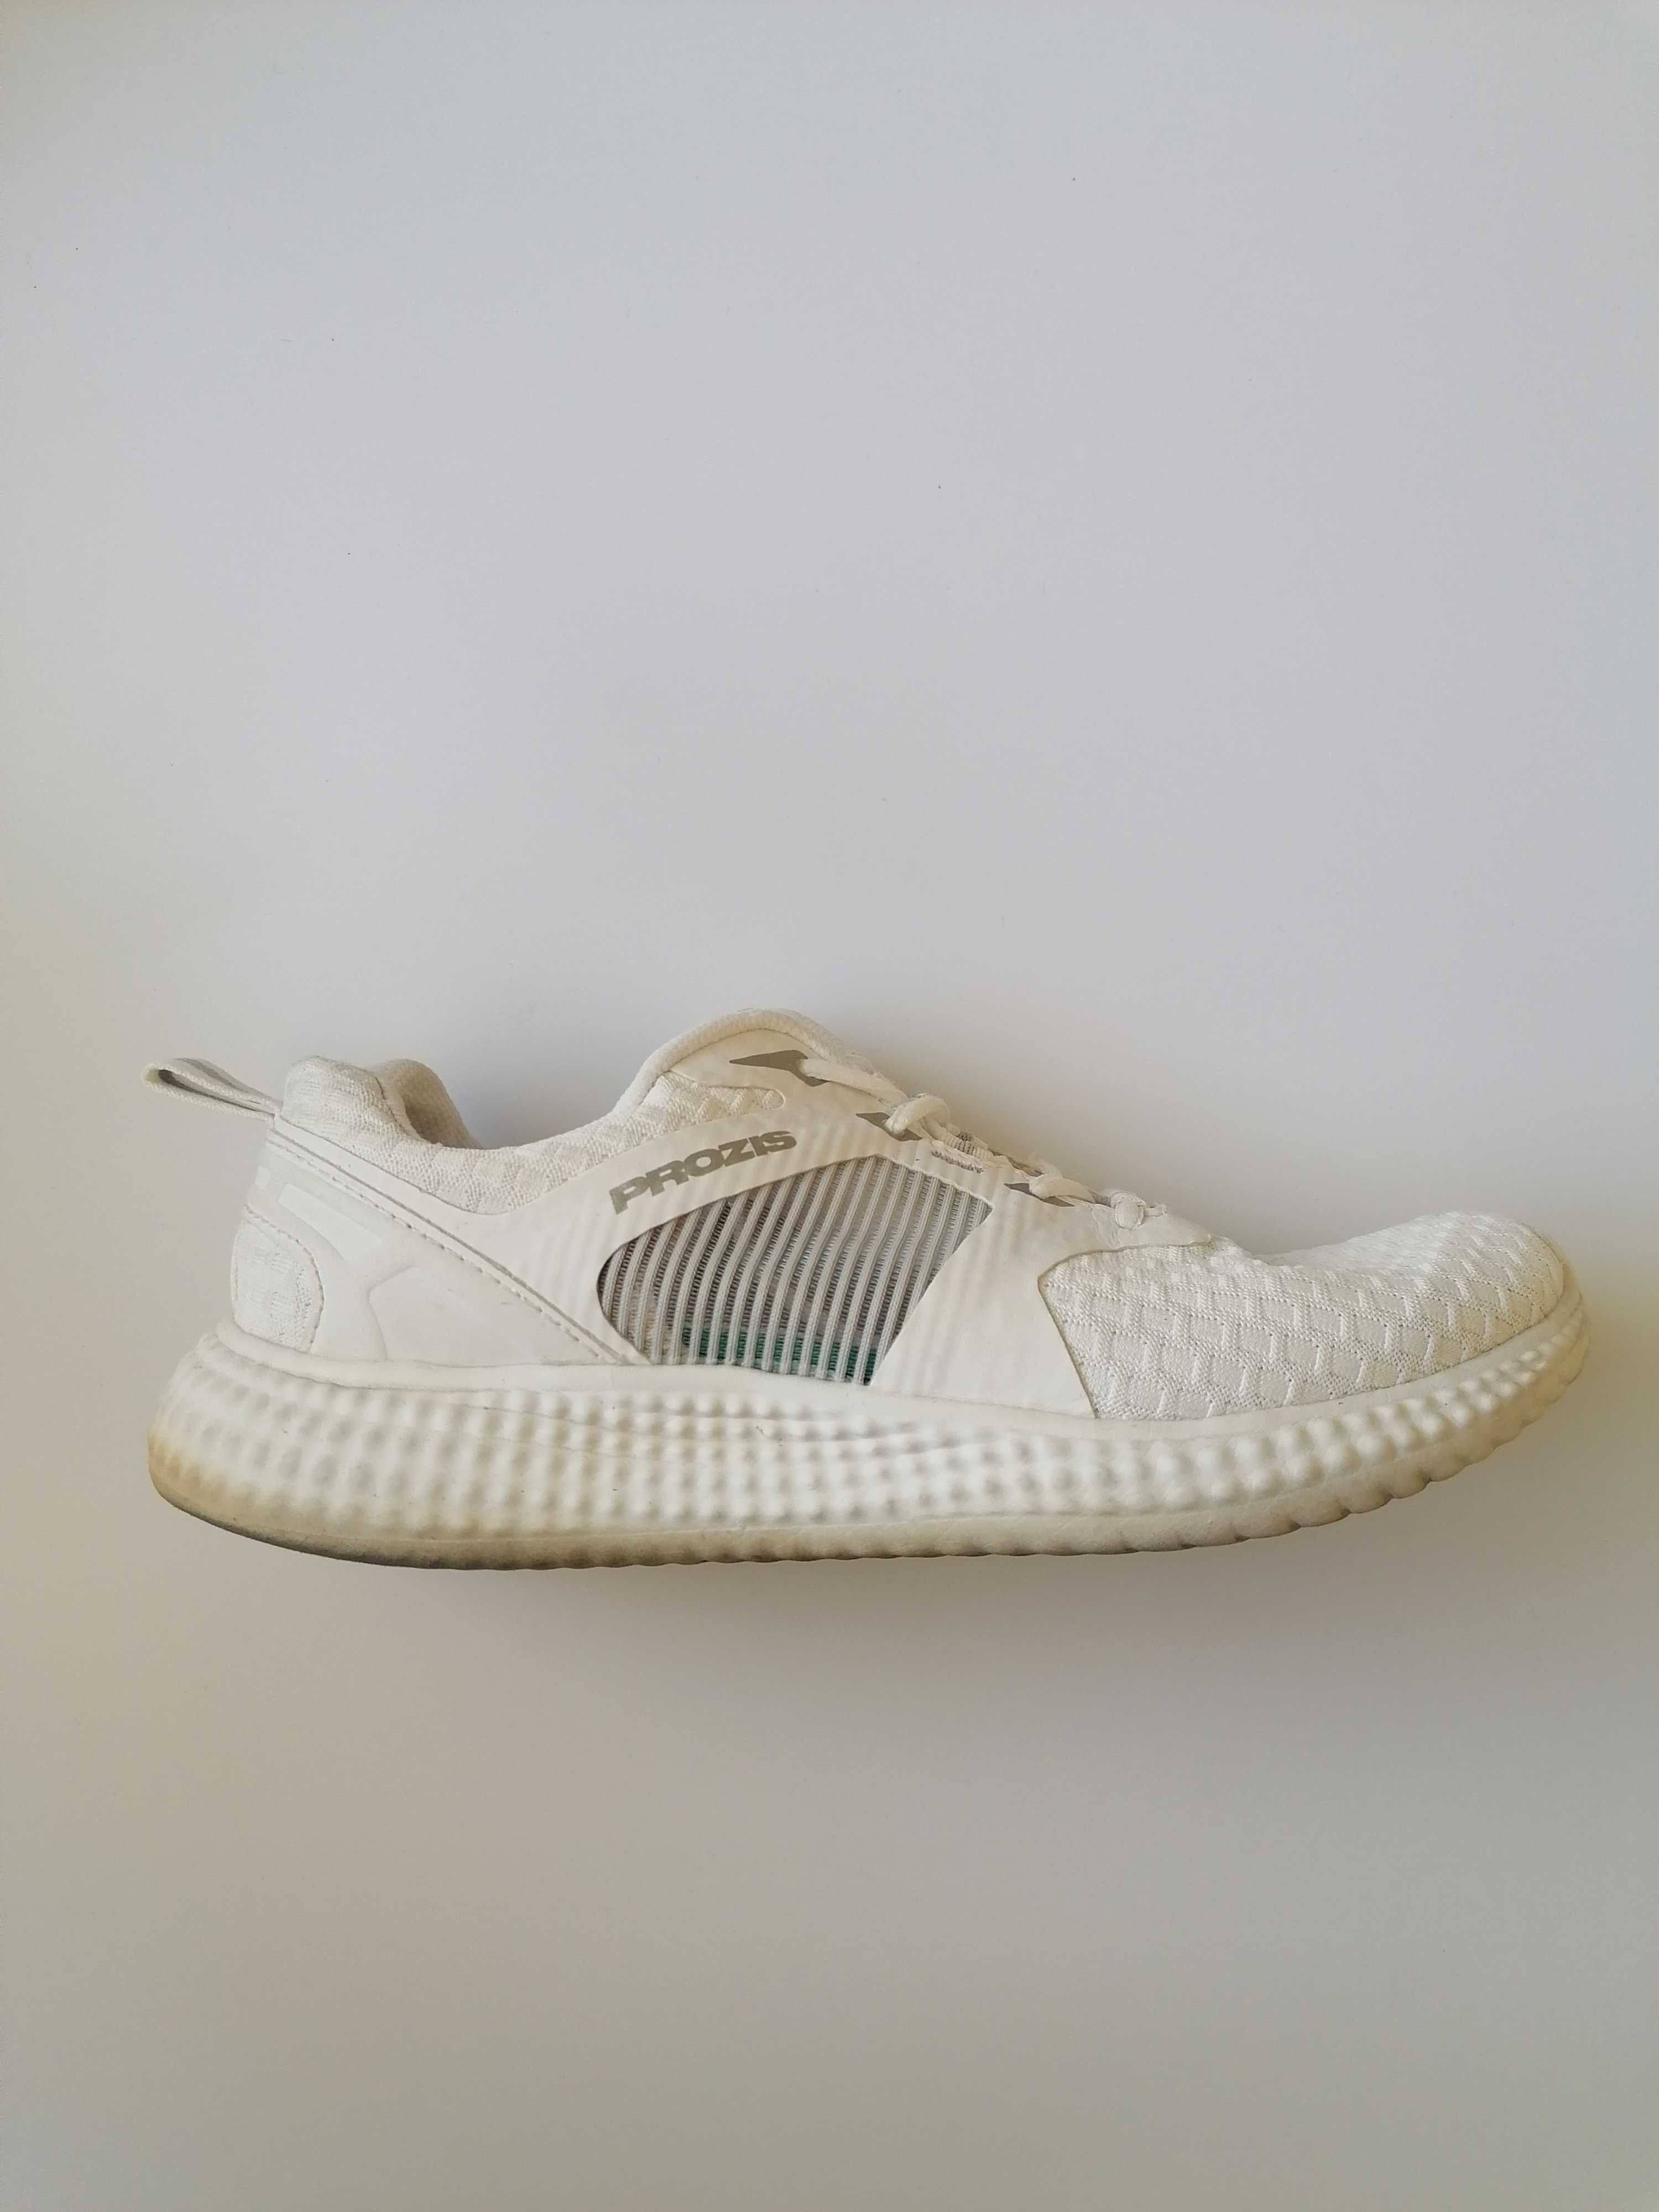 Sapatilhas Ténis Prozis Brancos - Tamanho 38 Sneakers